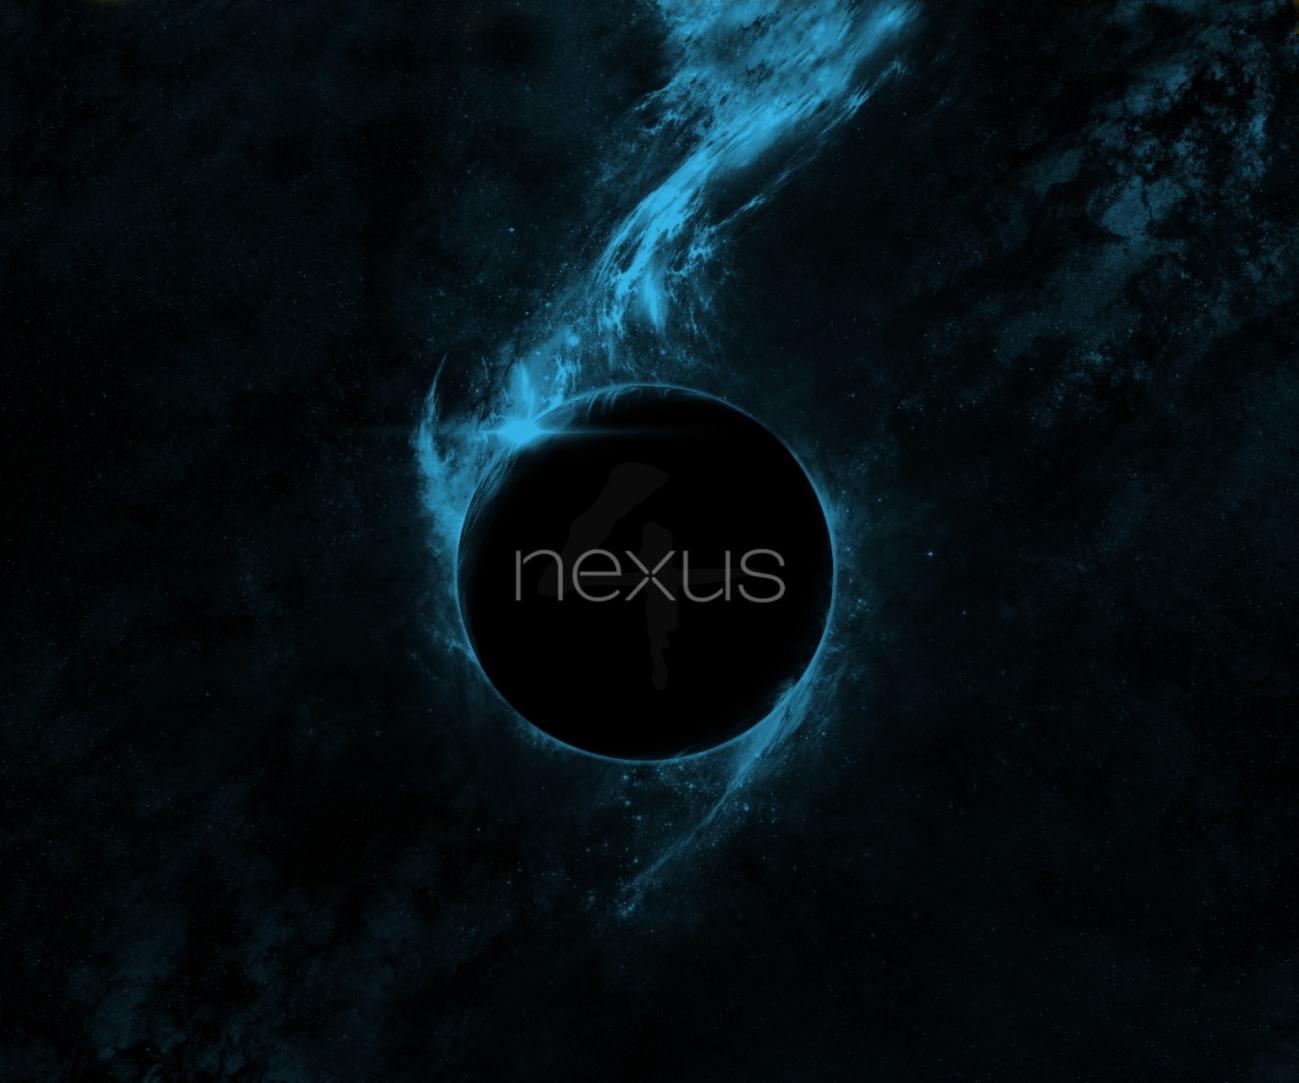 Nexus Wallpaper HDq Cover Background 72wsp